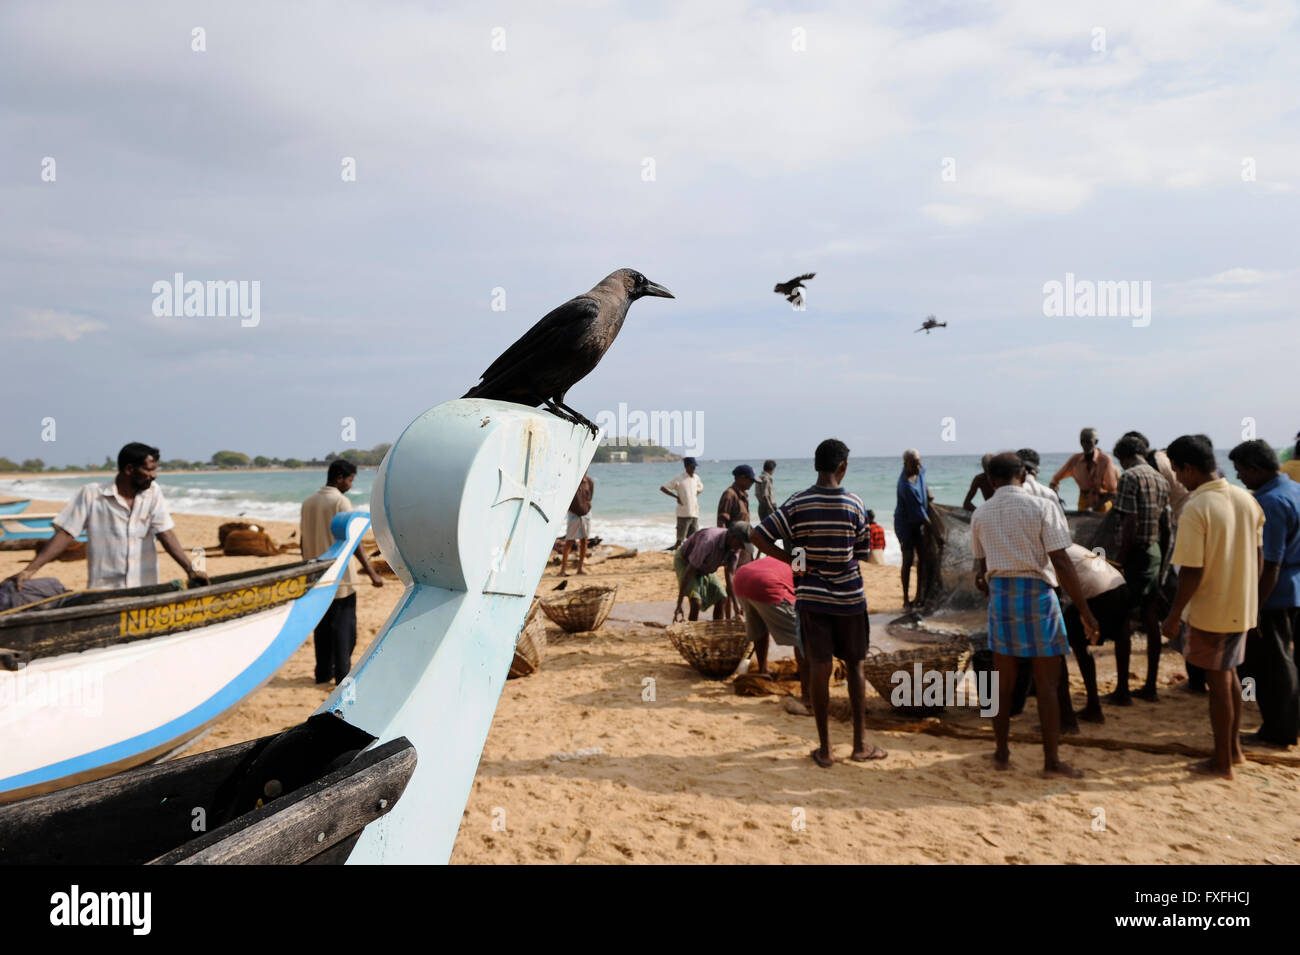 Trincomalee, Sri Lanka , pescador traen las redes a la orilla / SRI LANKA Trincomalee, Fischer holen am Strand die Ein Netze Foto de stock